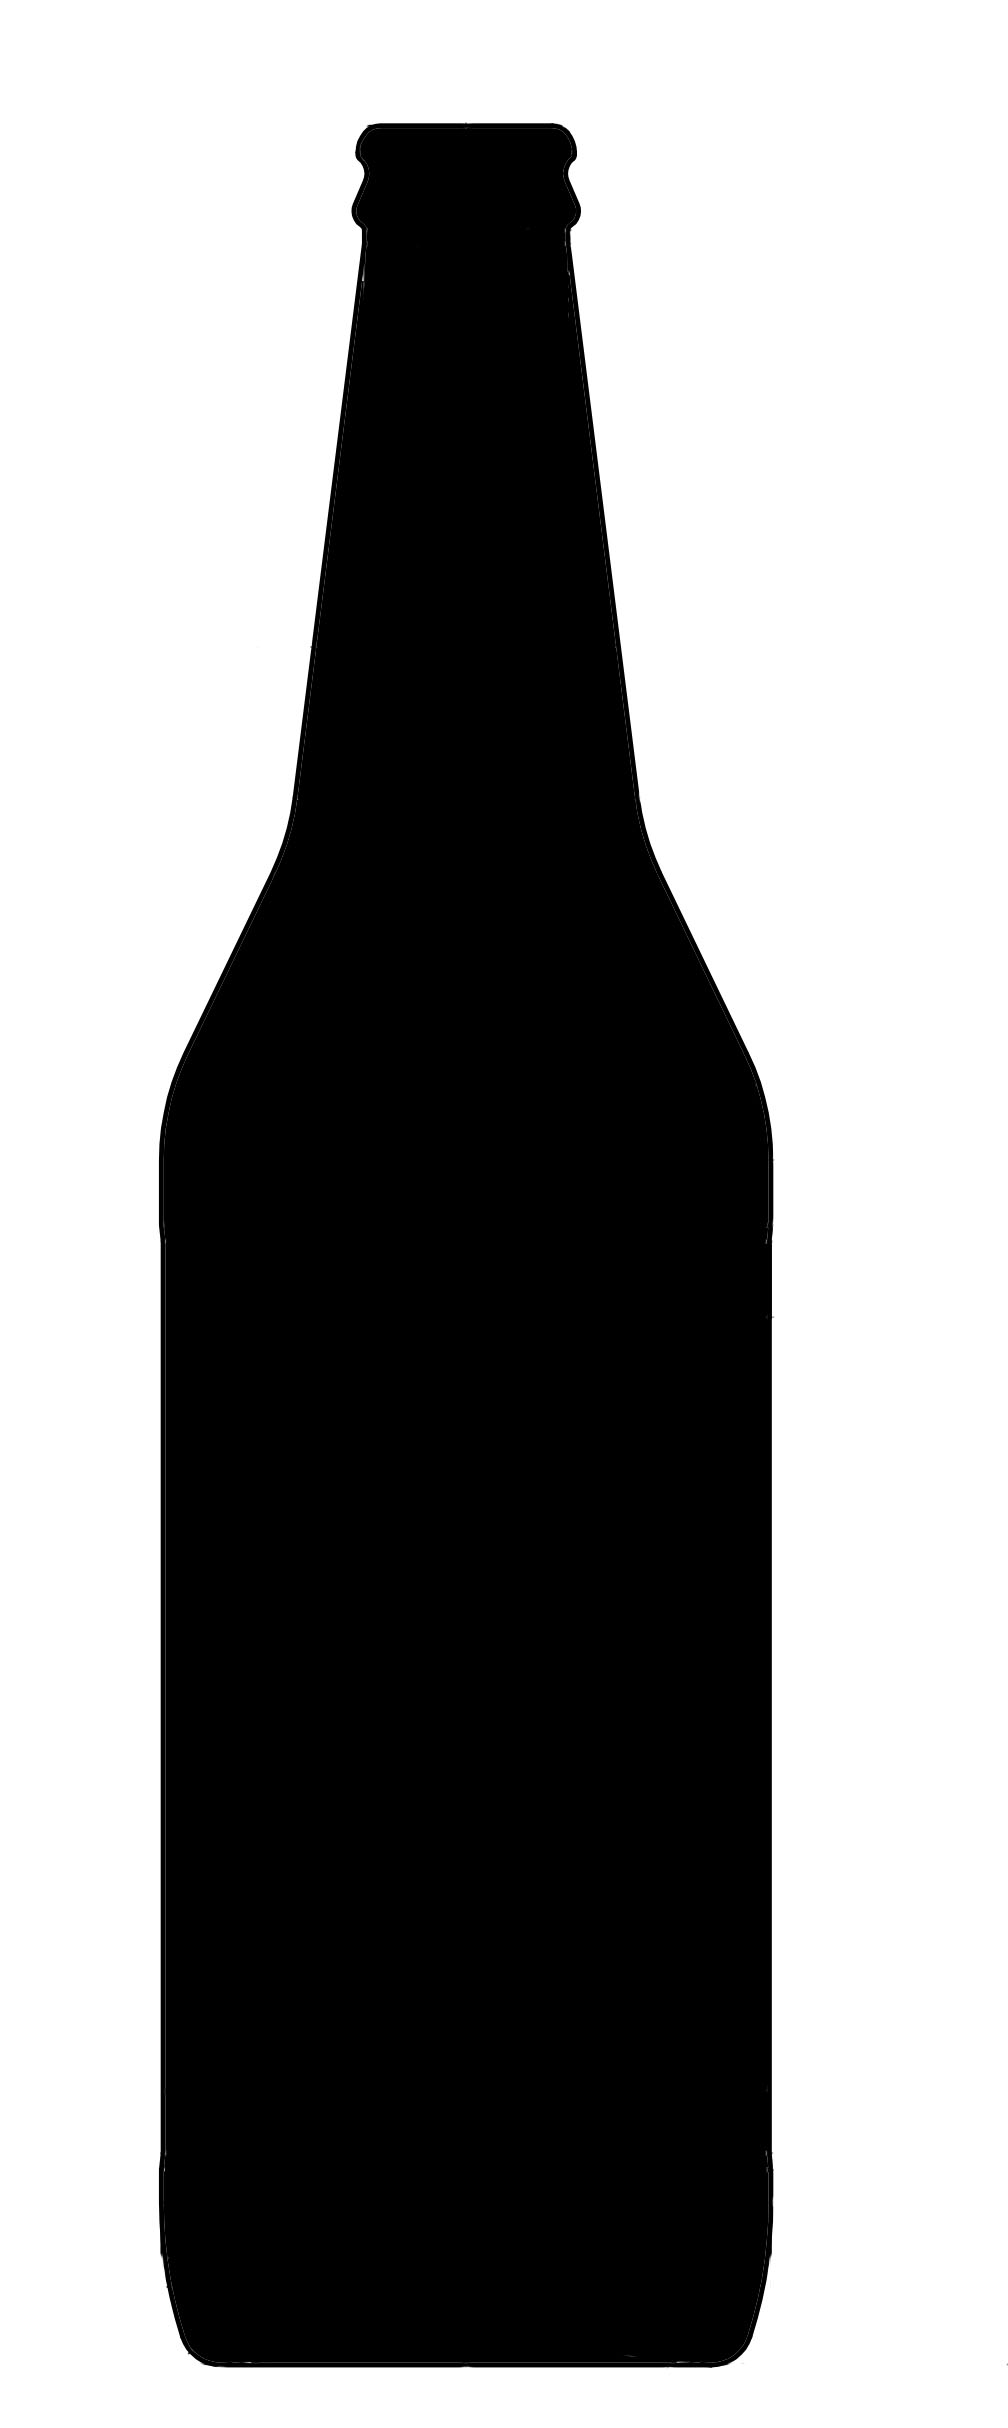 Beer Bottle Silhouette